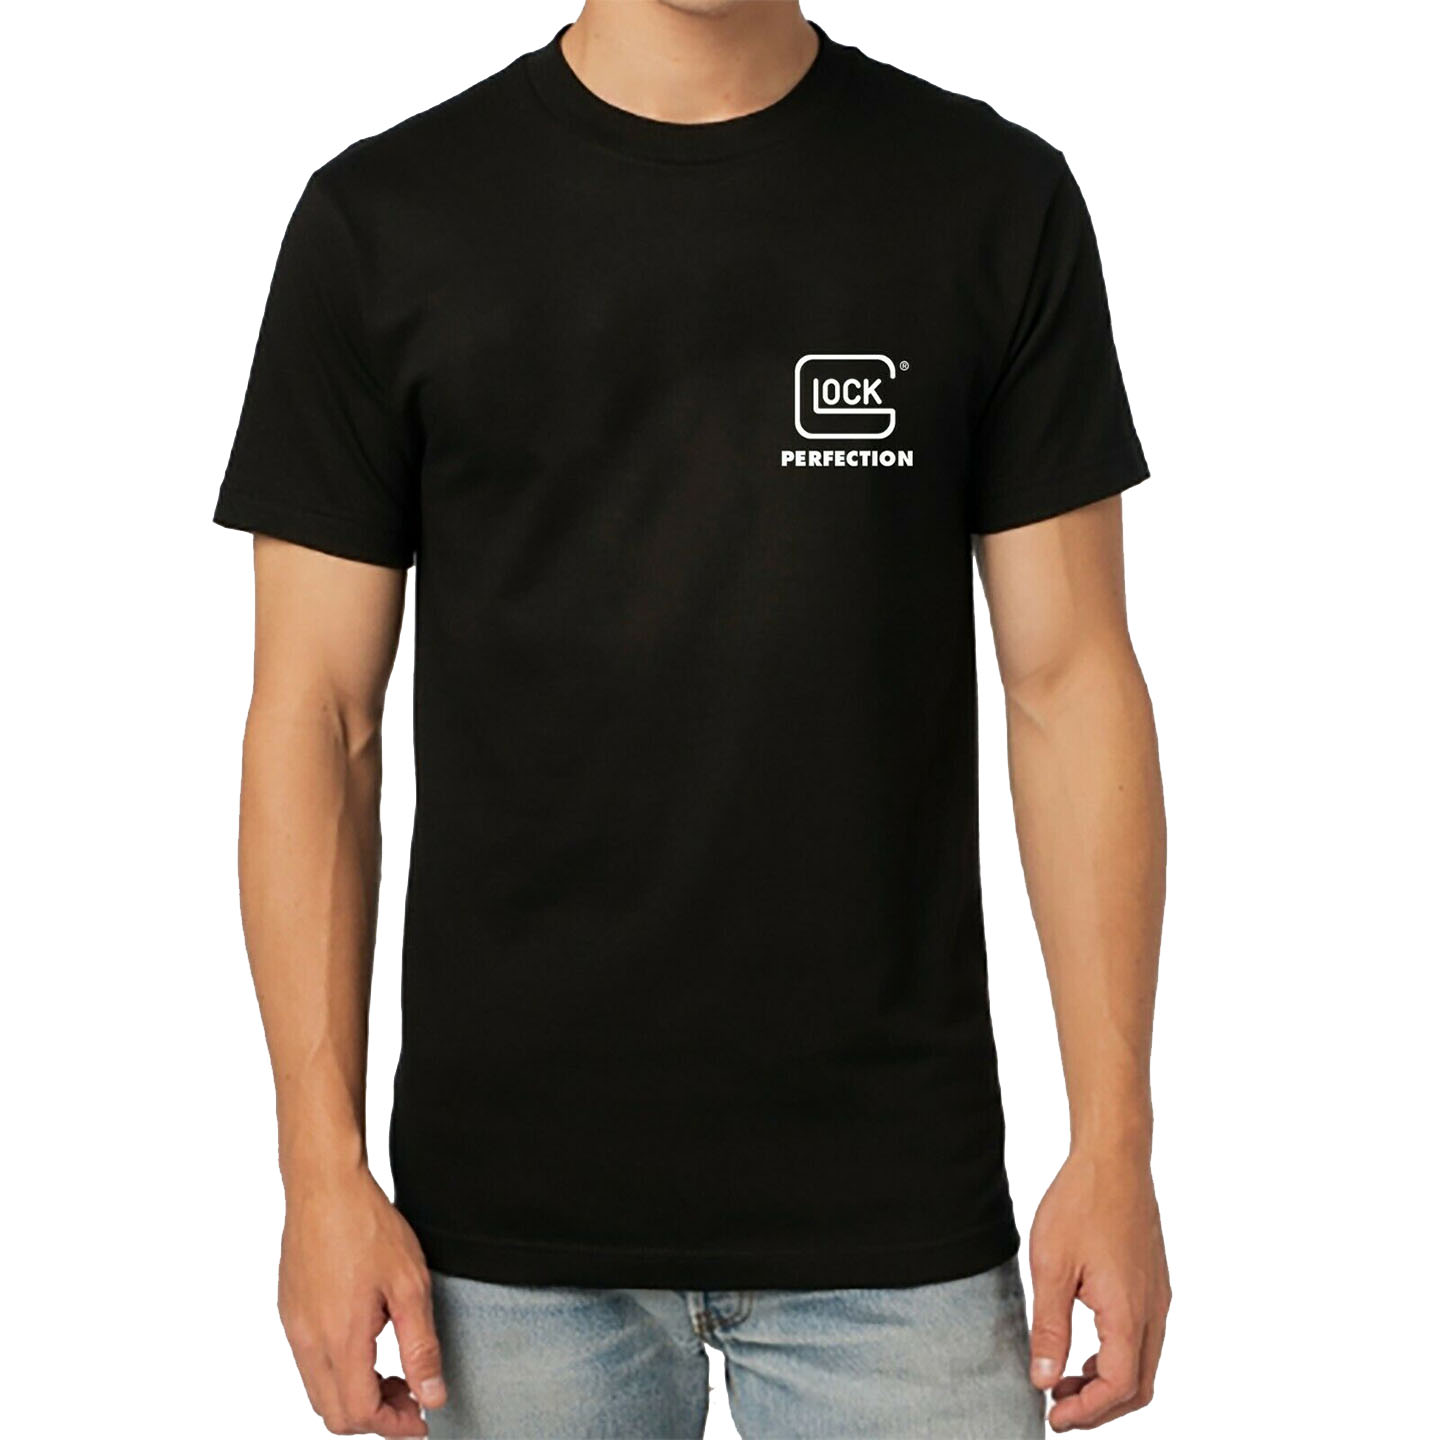 Vergemakkelijken Omzet bezorgdheid Glock Logo T-Shirt S M L XL 2XL 3XL 4XL 5XL – BLACK – Patriotic Assault